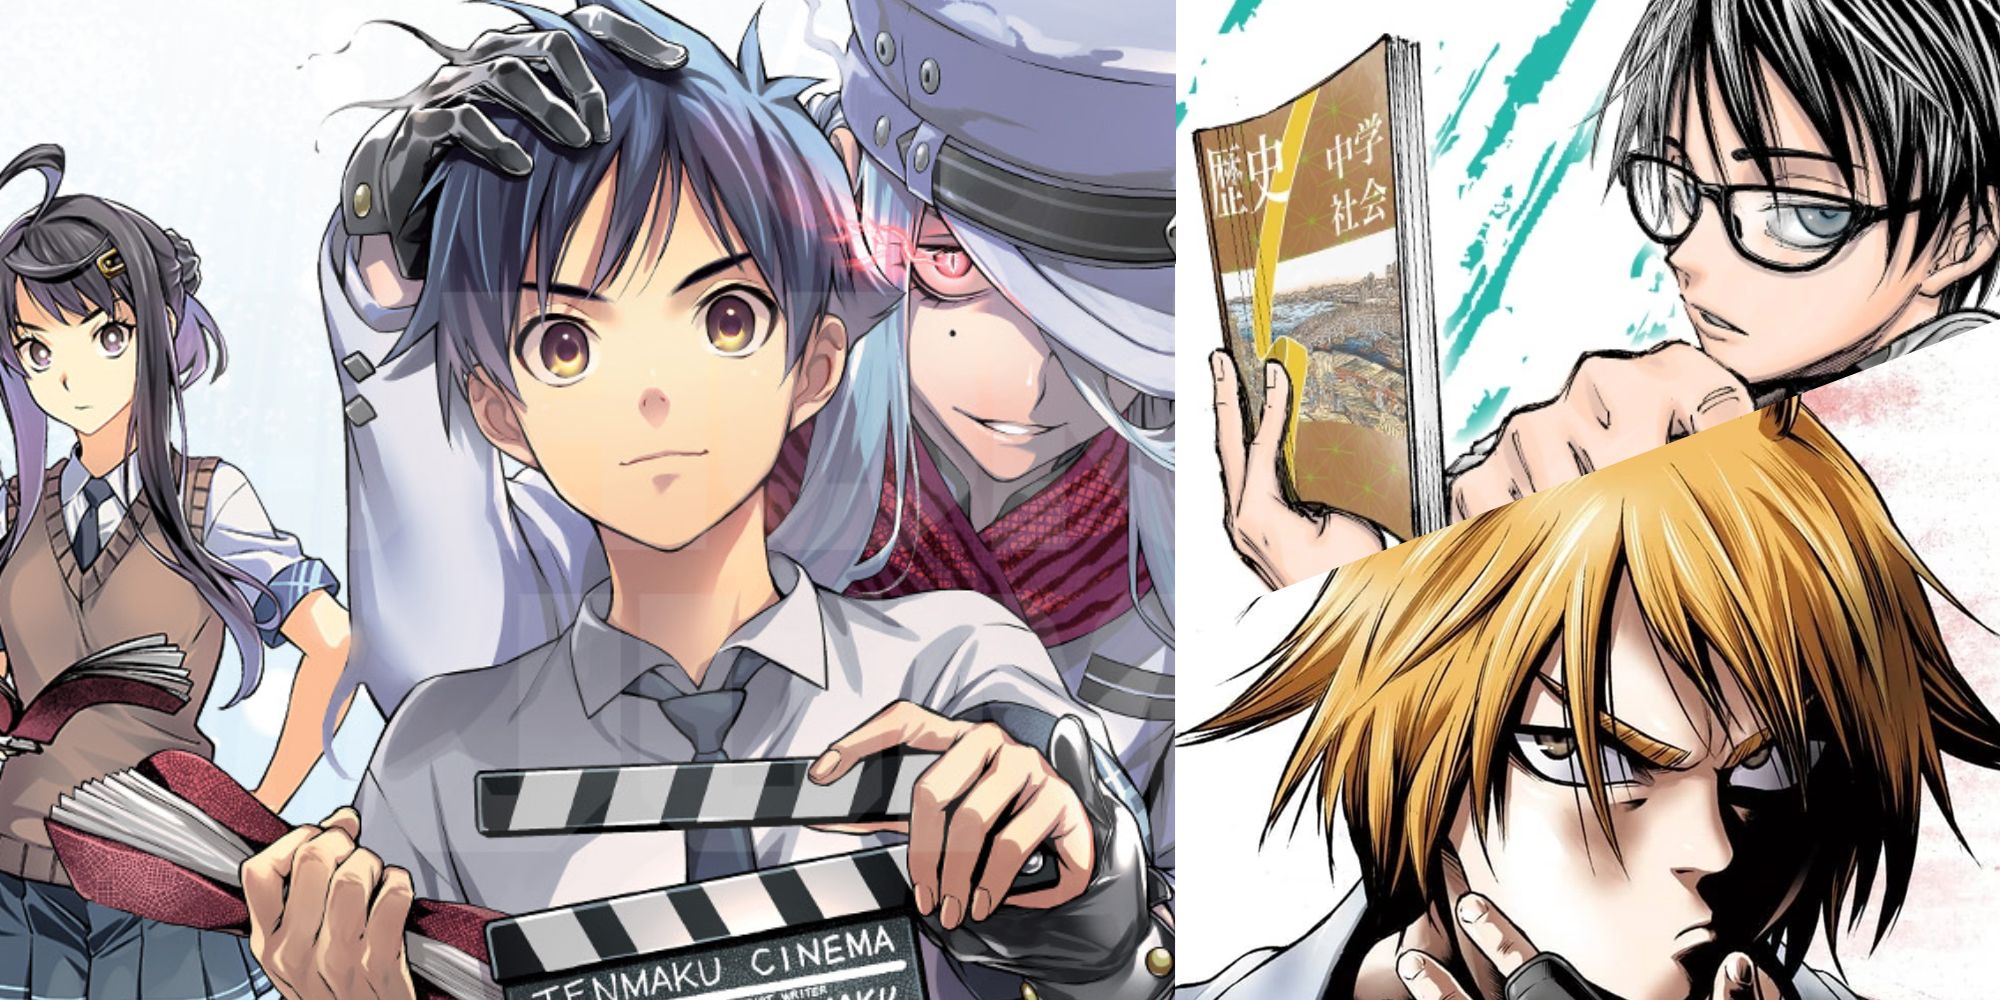 Manga's Top-Selling Titles of 2023: Fall Update